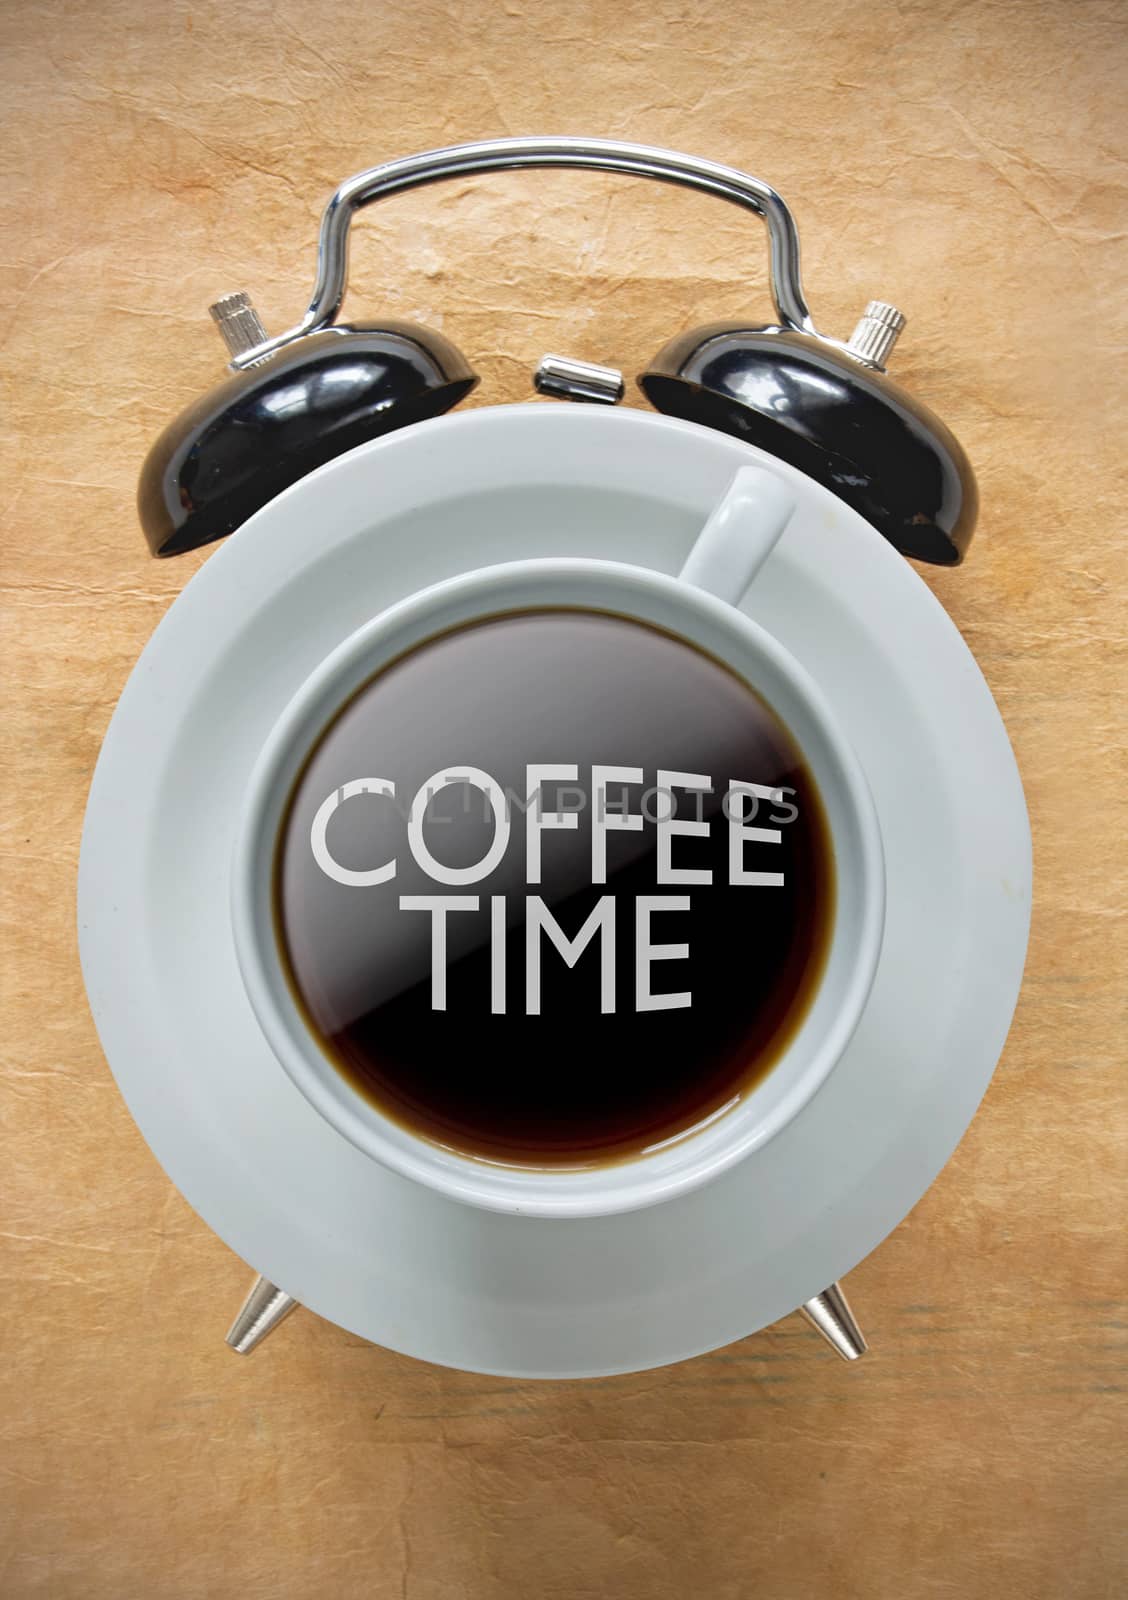 Coffee time break concept  by unikpix